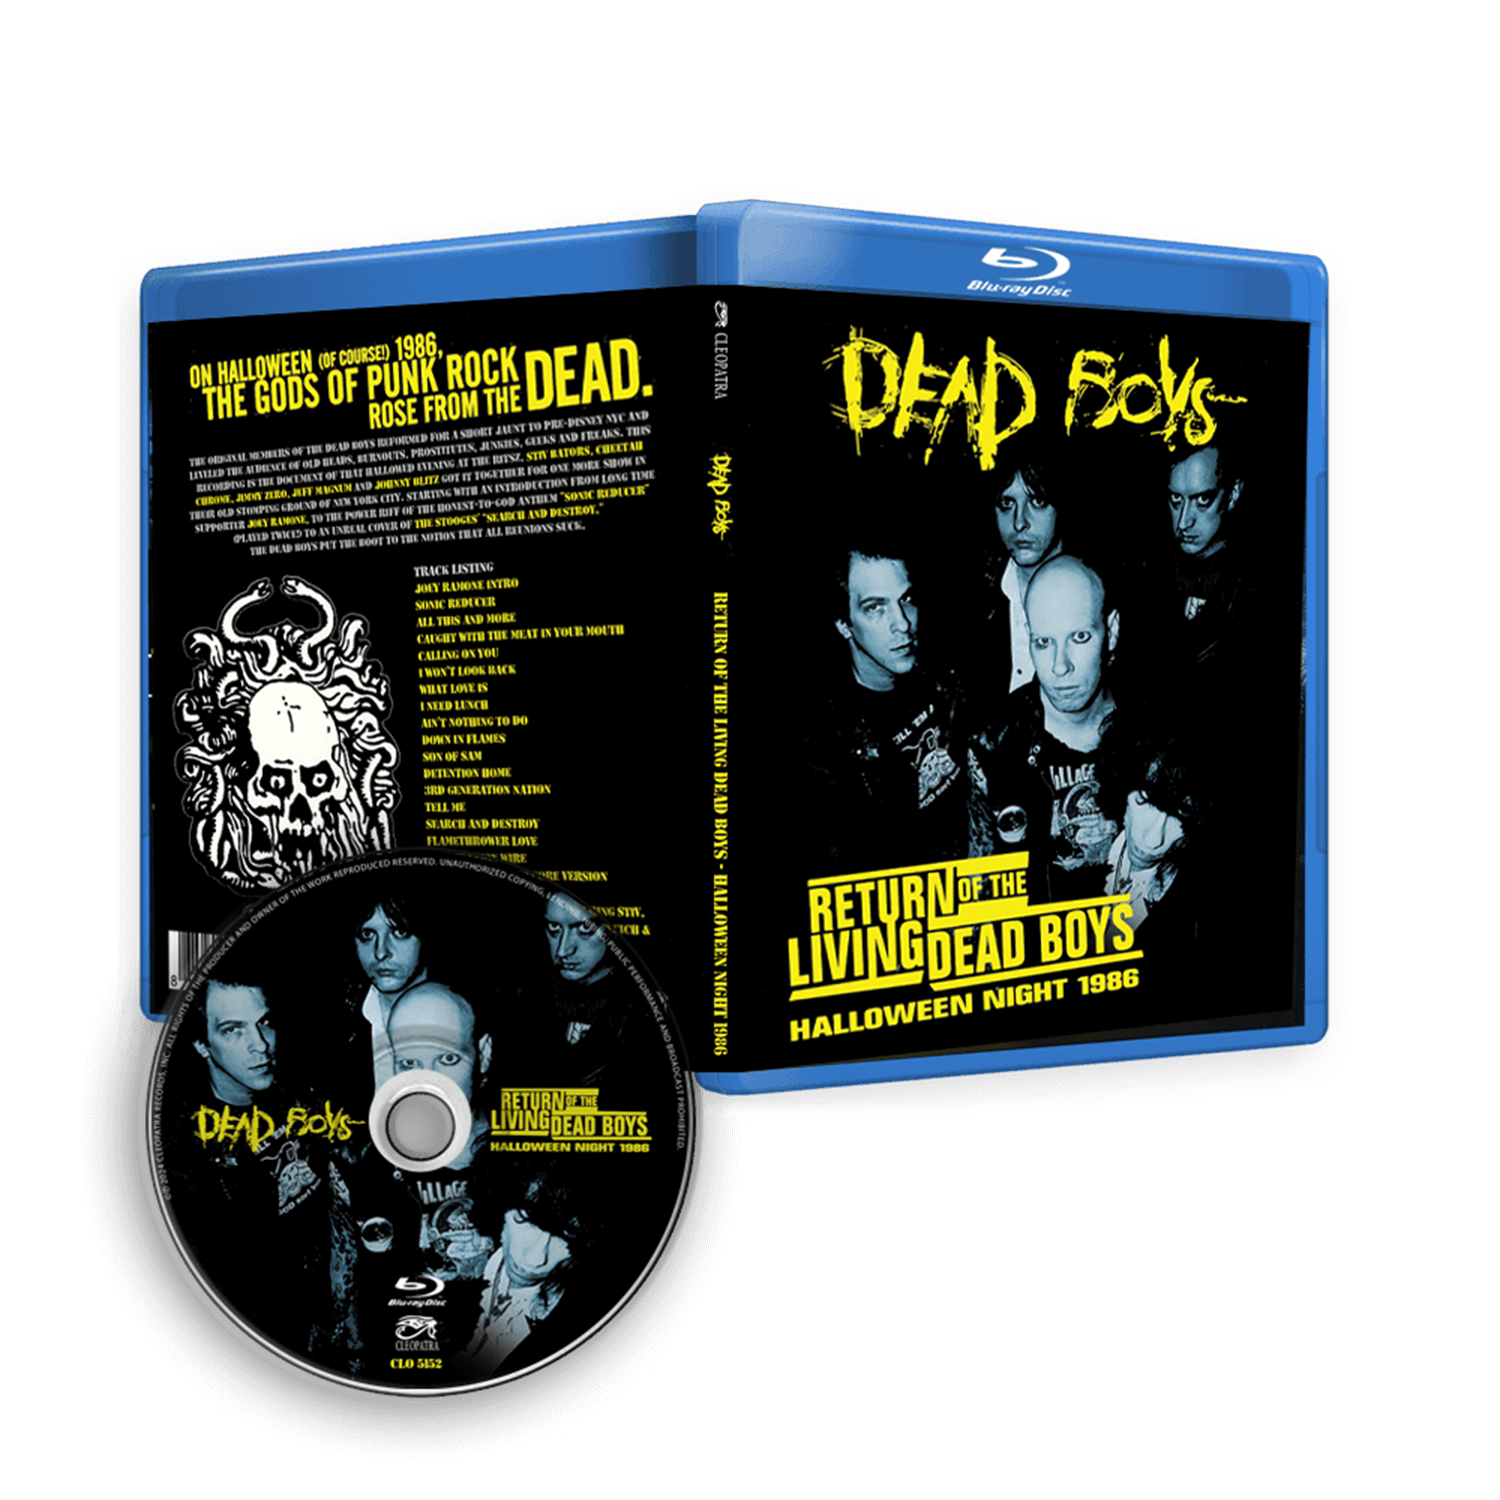 Dead Boys - Return Of The Living Dead Boys - Halloween Night 1986 (DVD or  Blu-Ray)